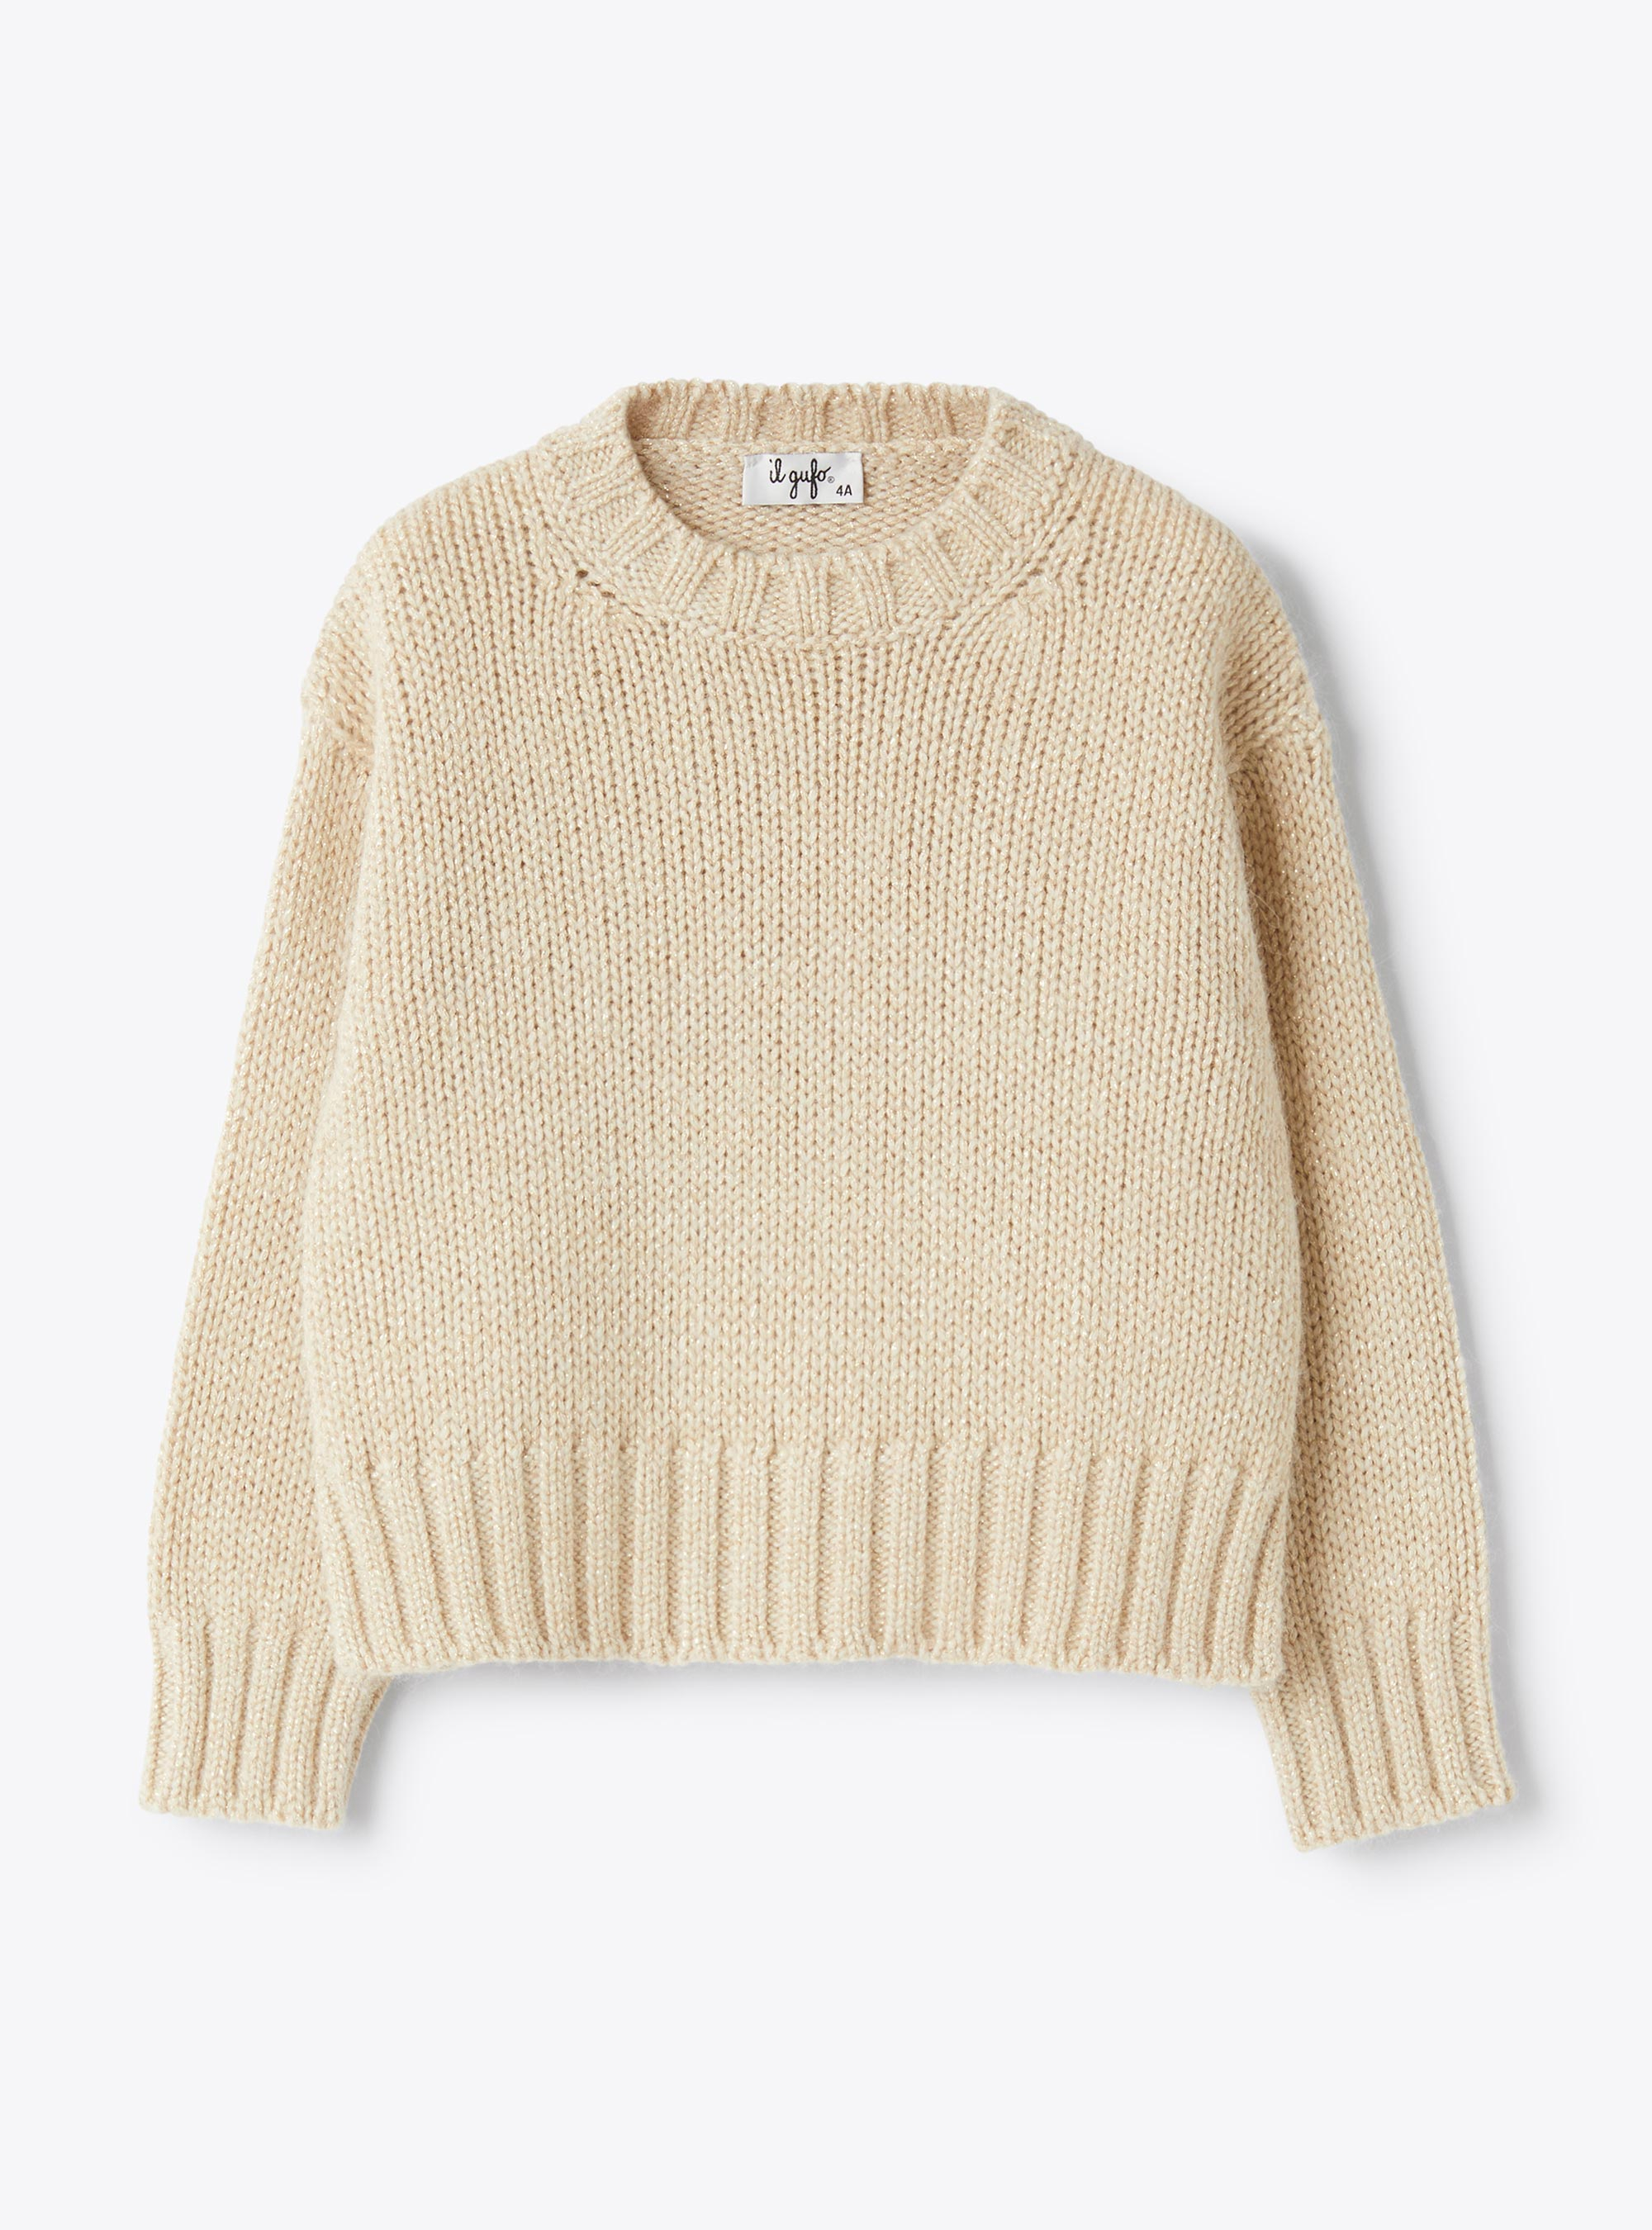 Viscose and lurex blend yarn crew neck sweater - Sweaters - Il Gufo